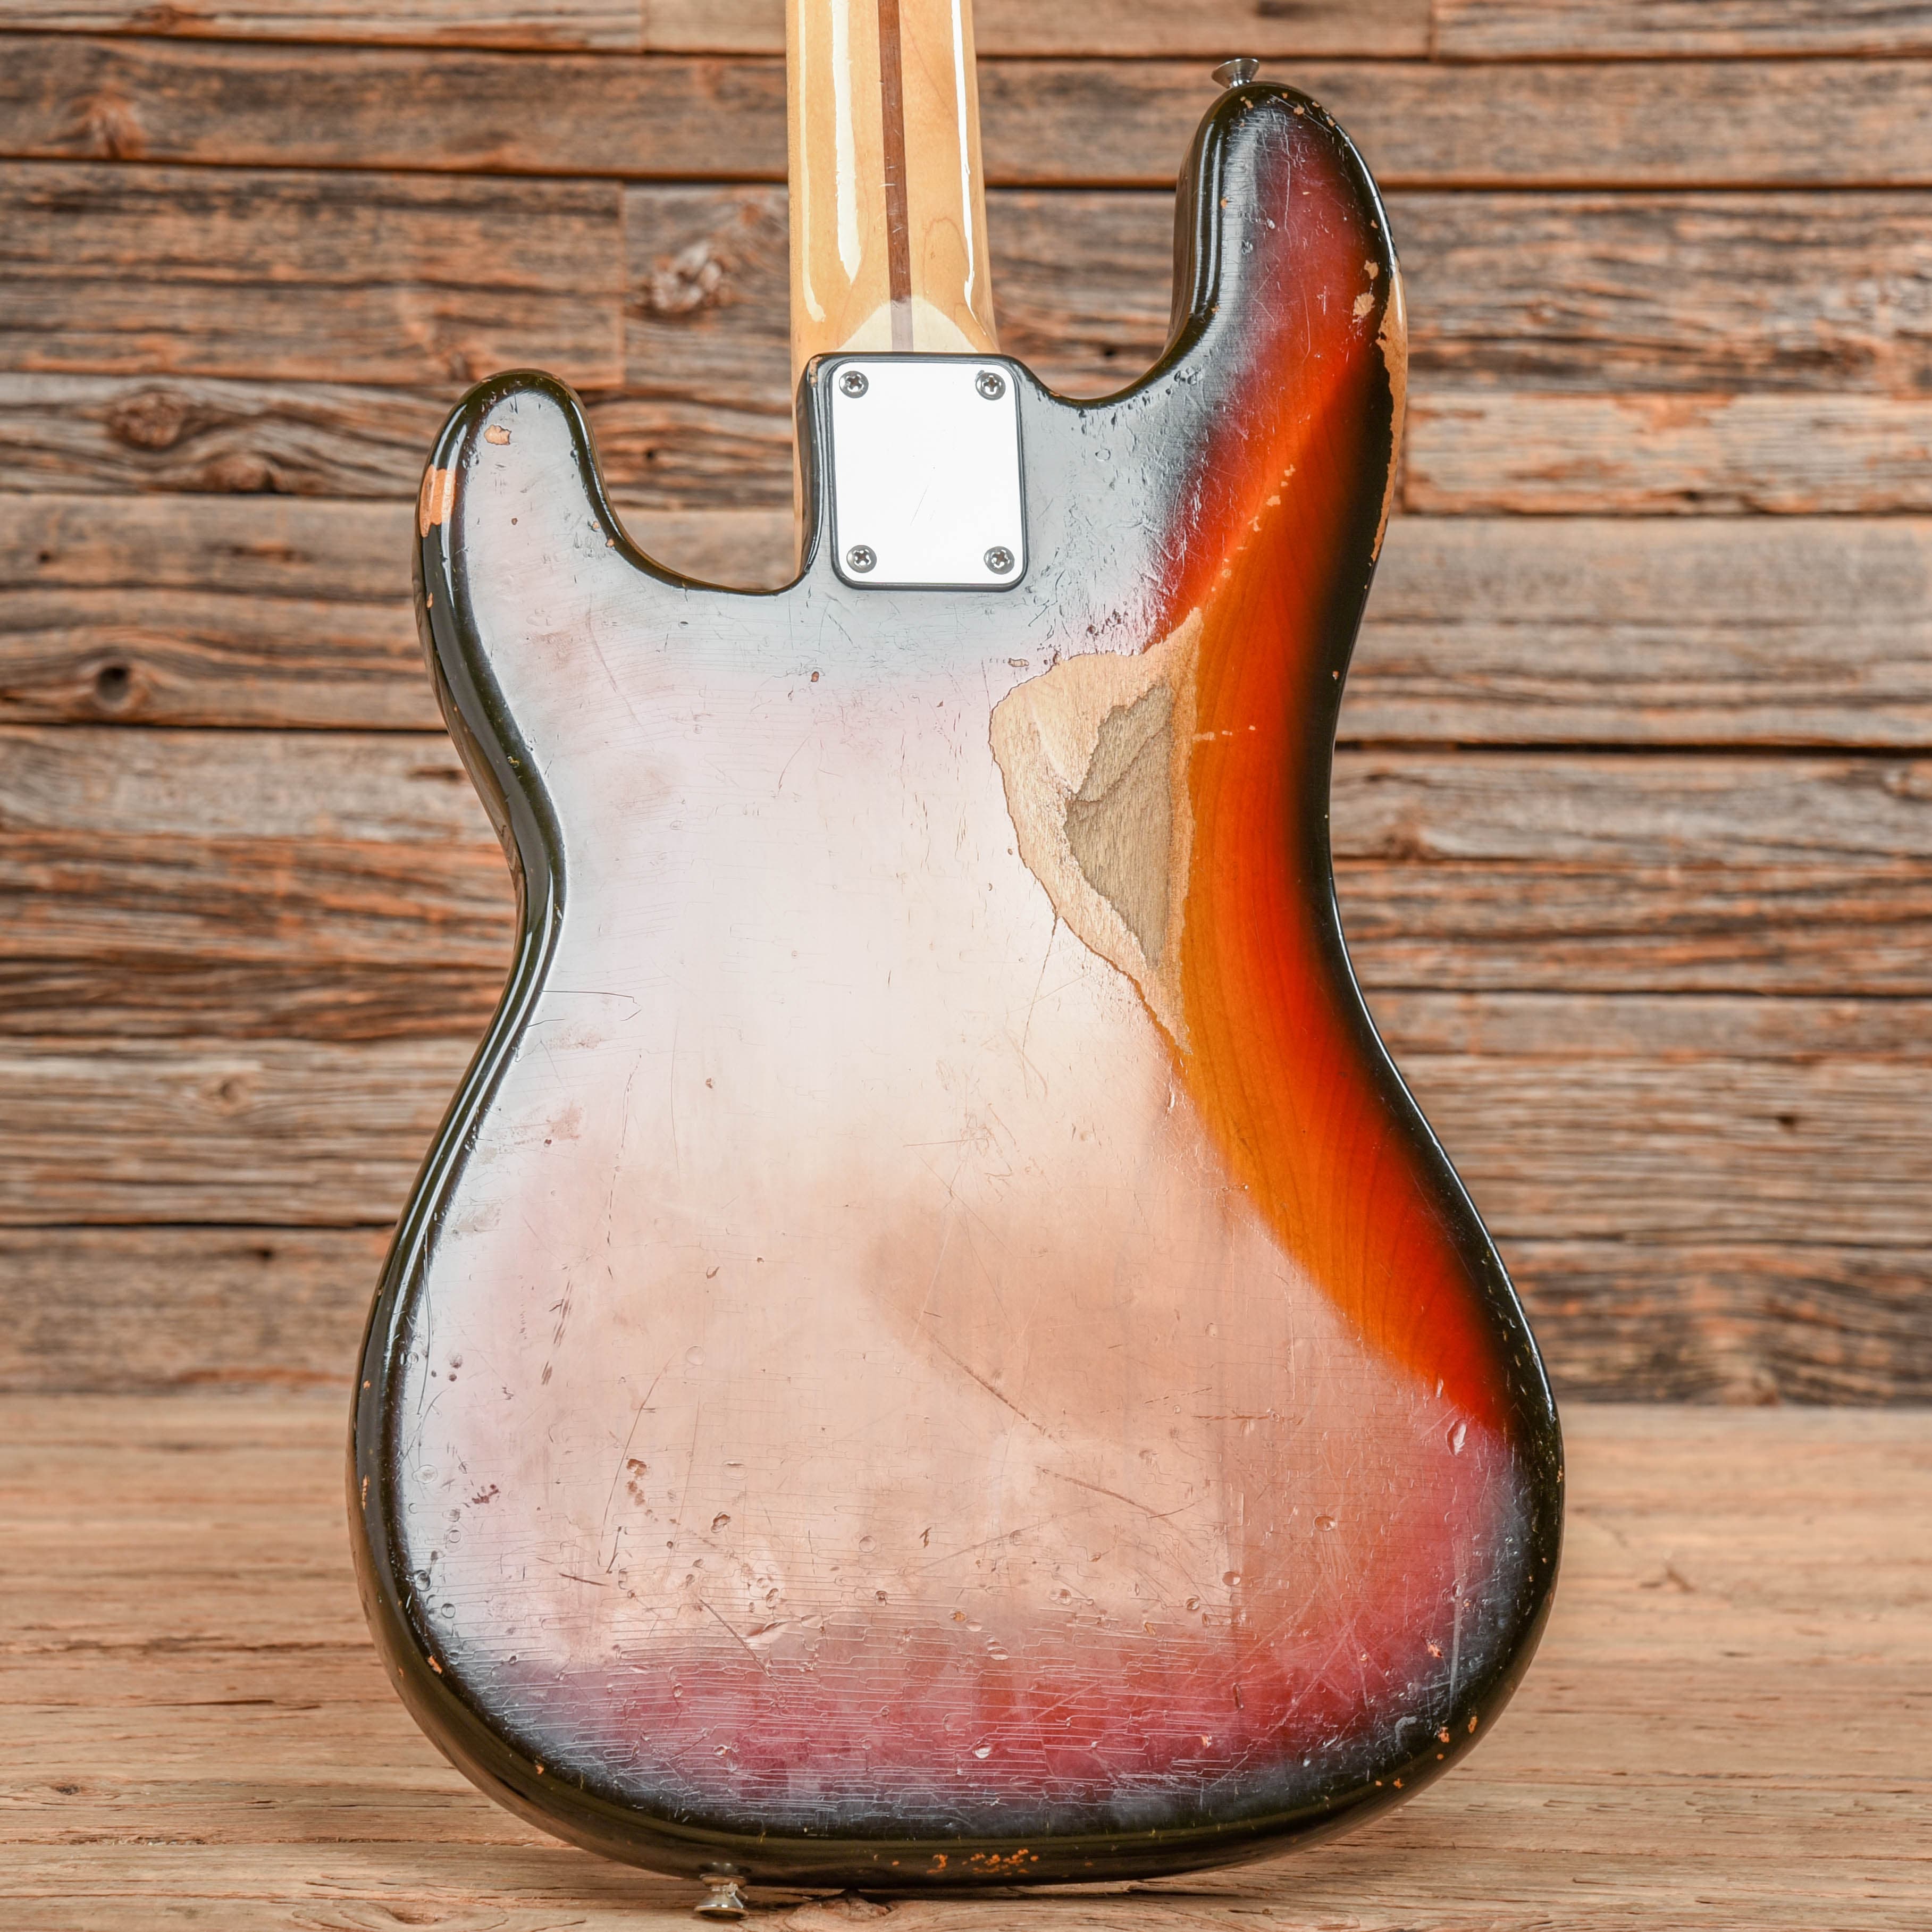 Fender Precison Bass Sunburst 1973 Bass Guitars / 4-String